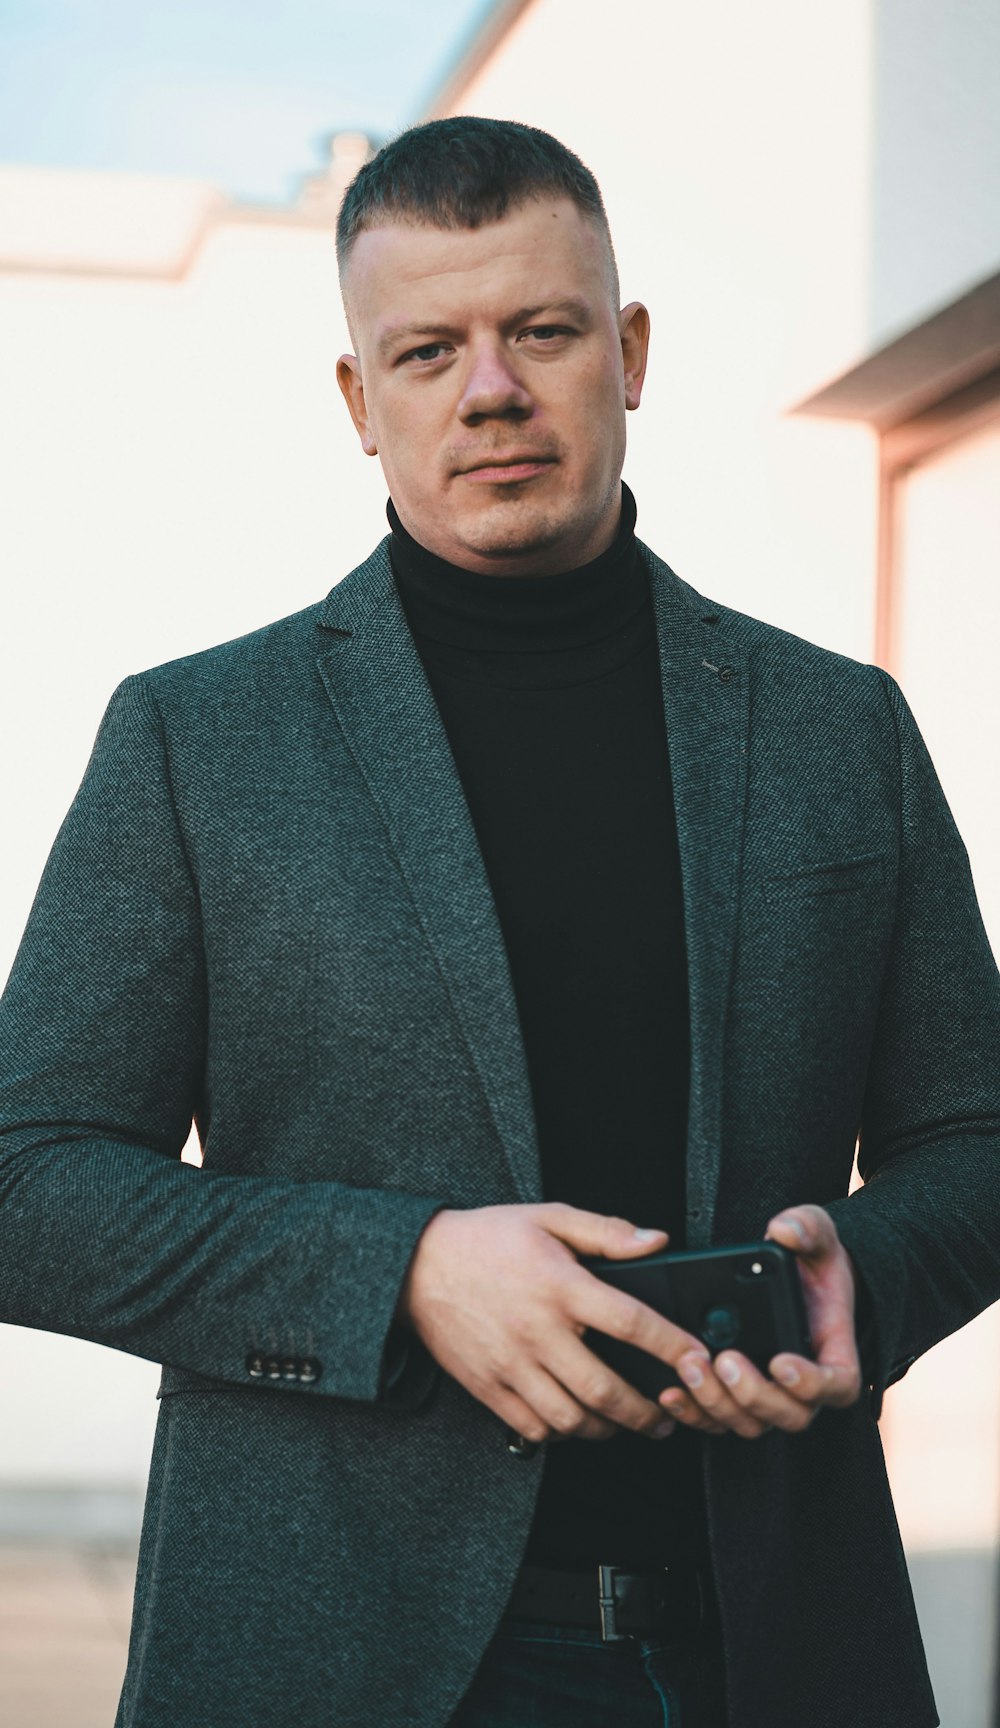 man in black suit holding black smartphone